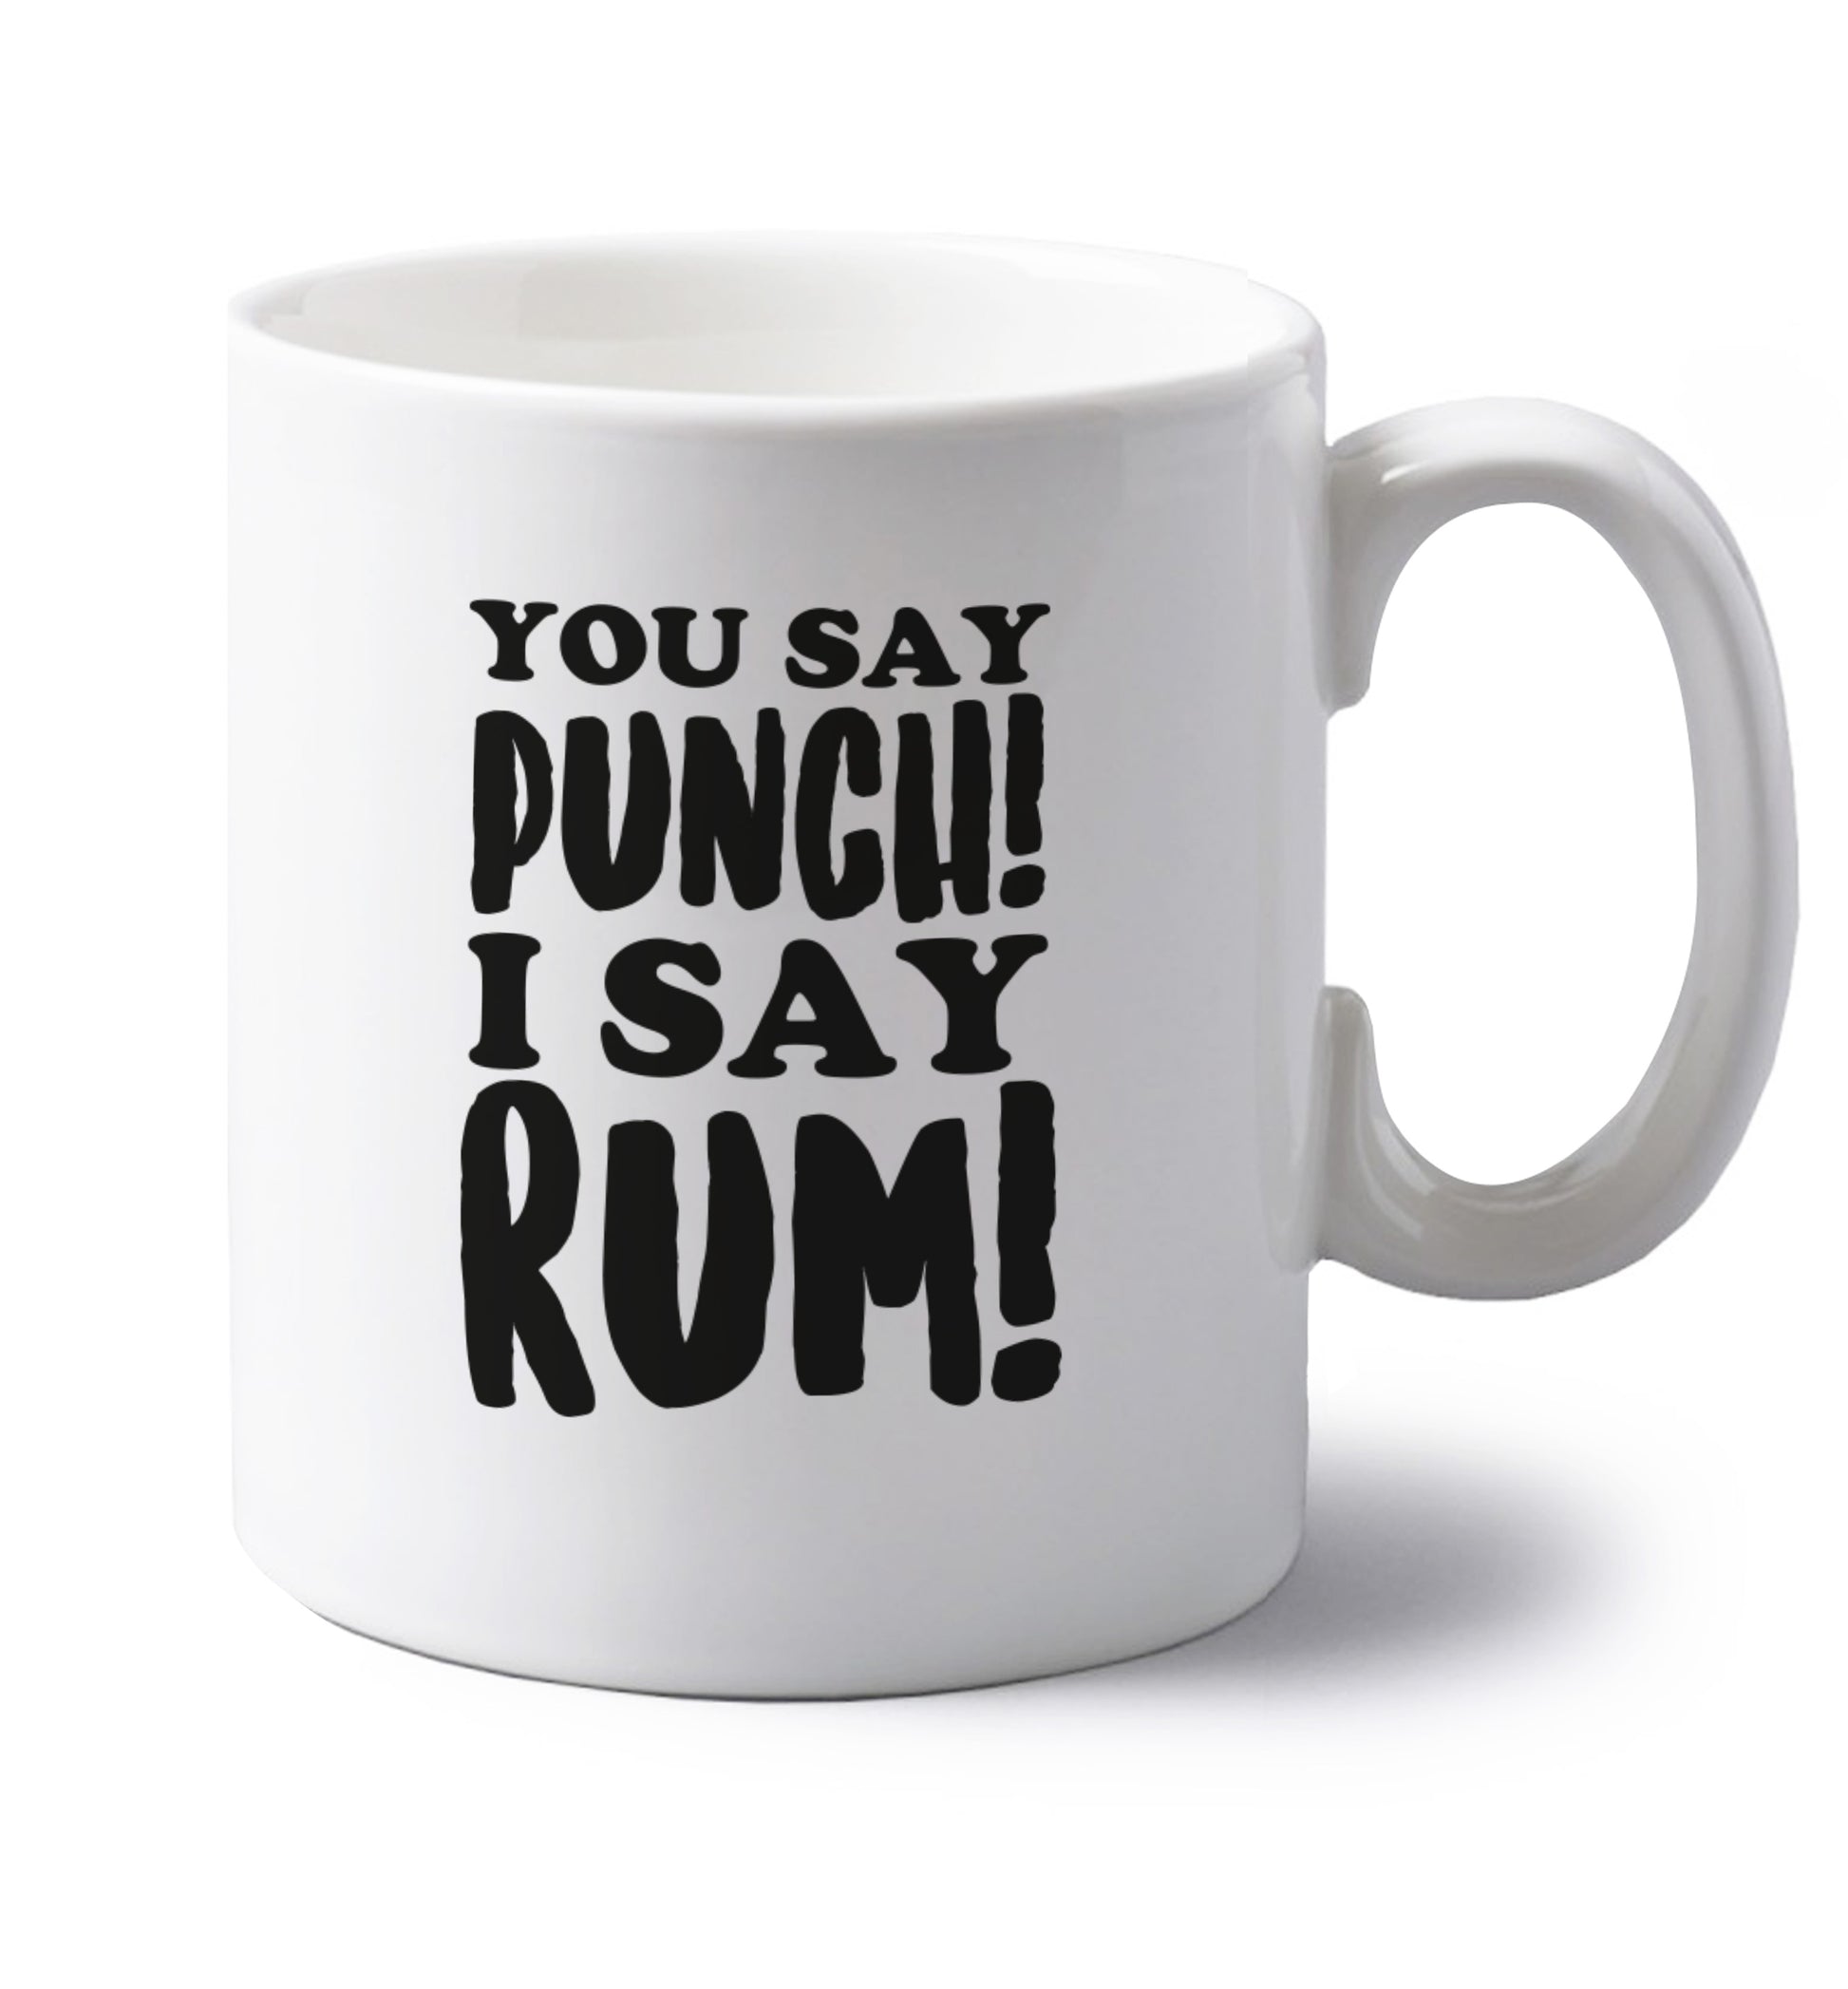 You say punch I say rum! left handed white ceramic mug 